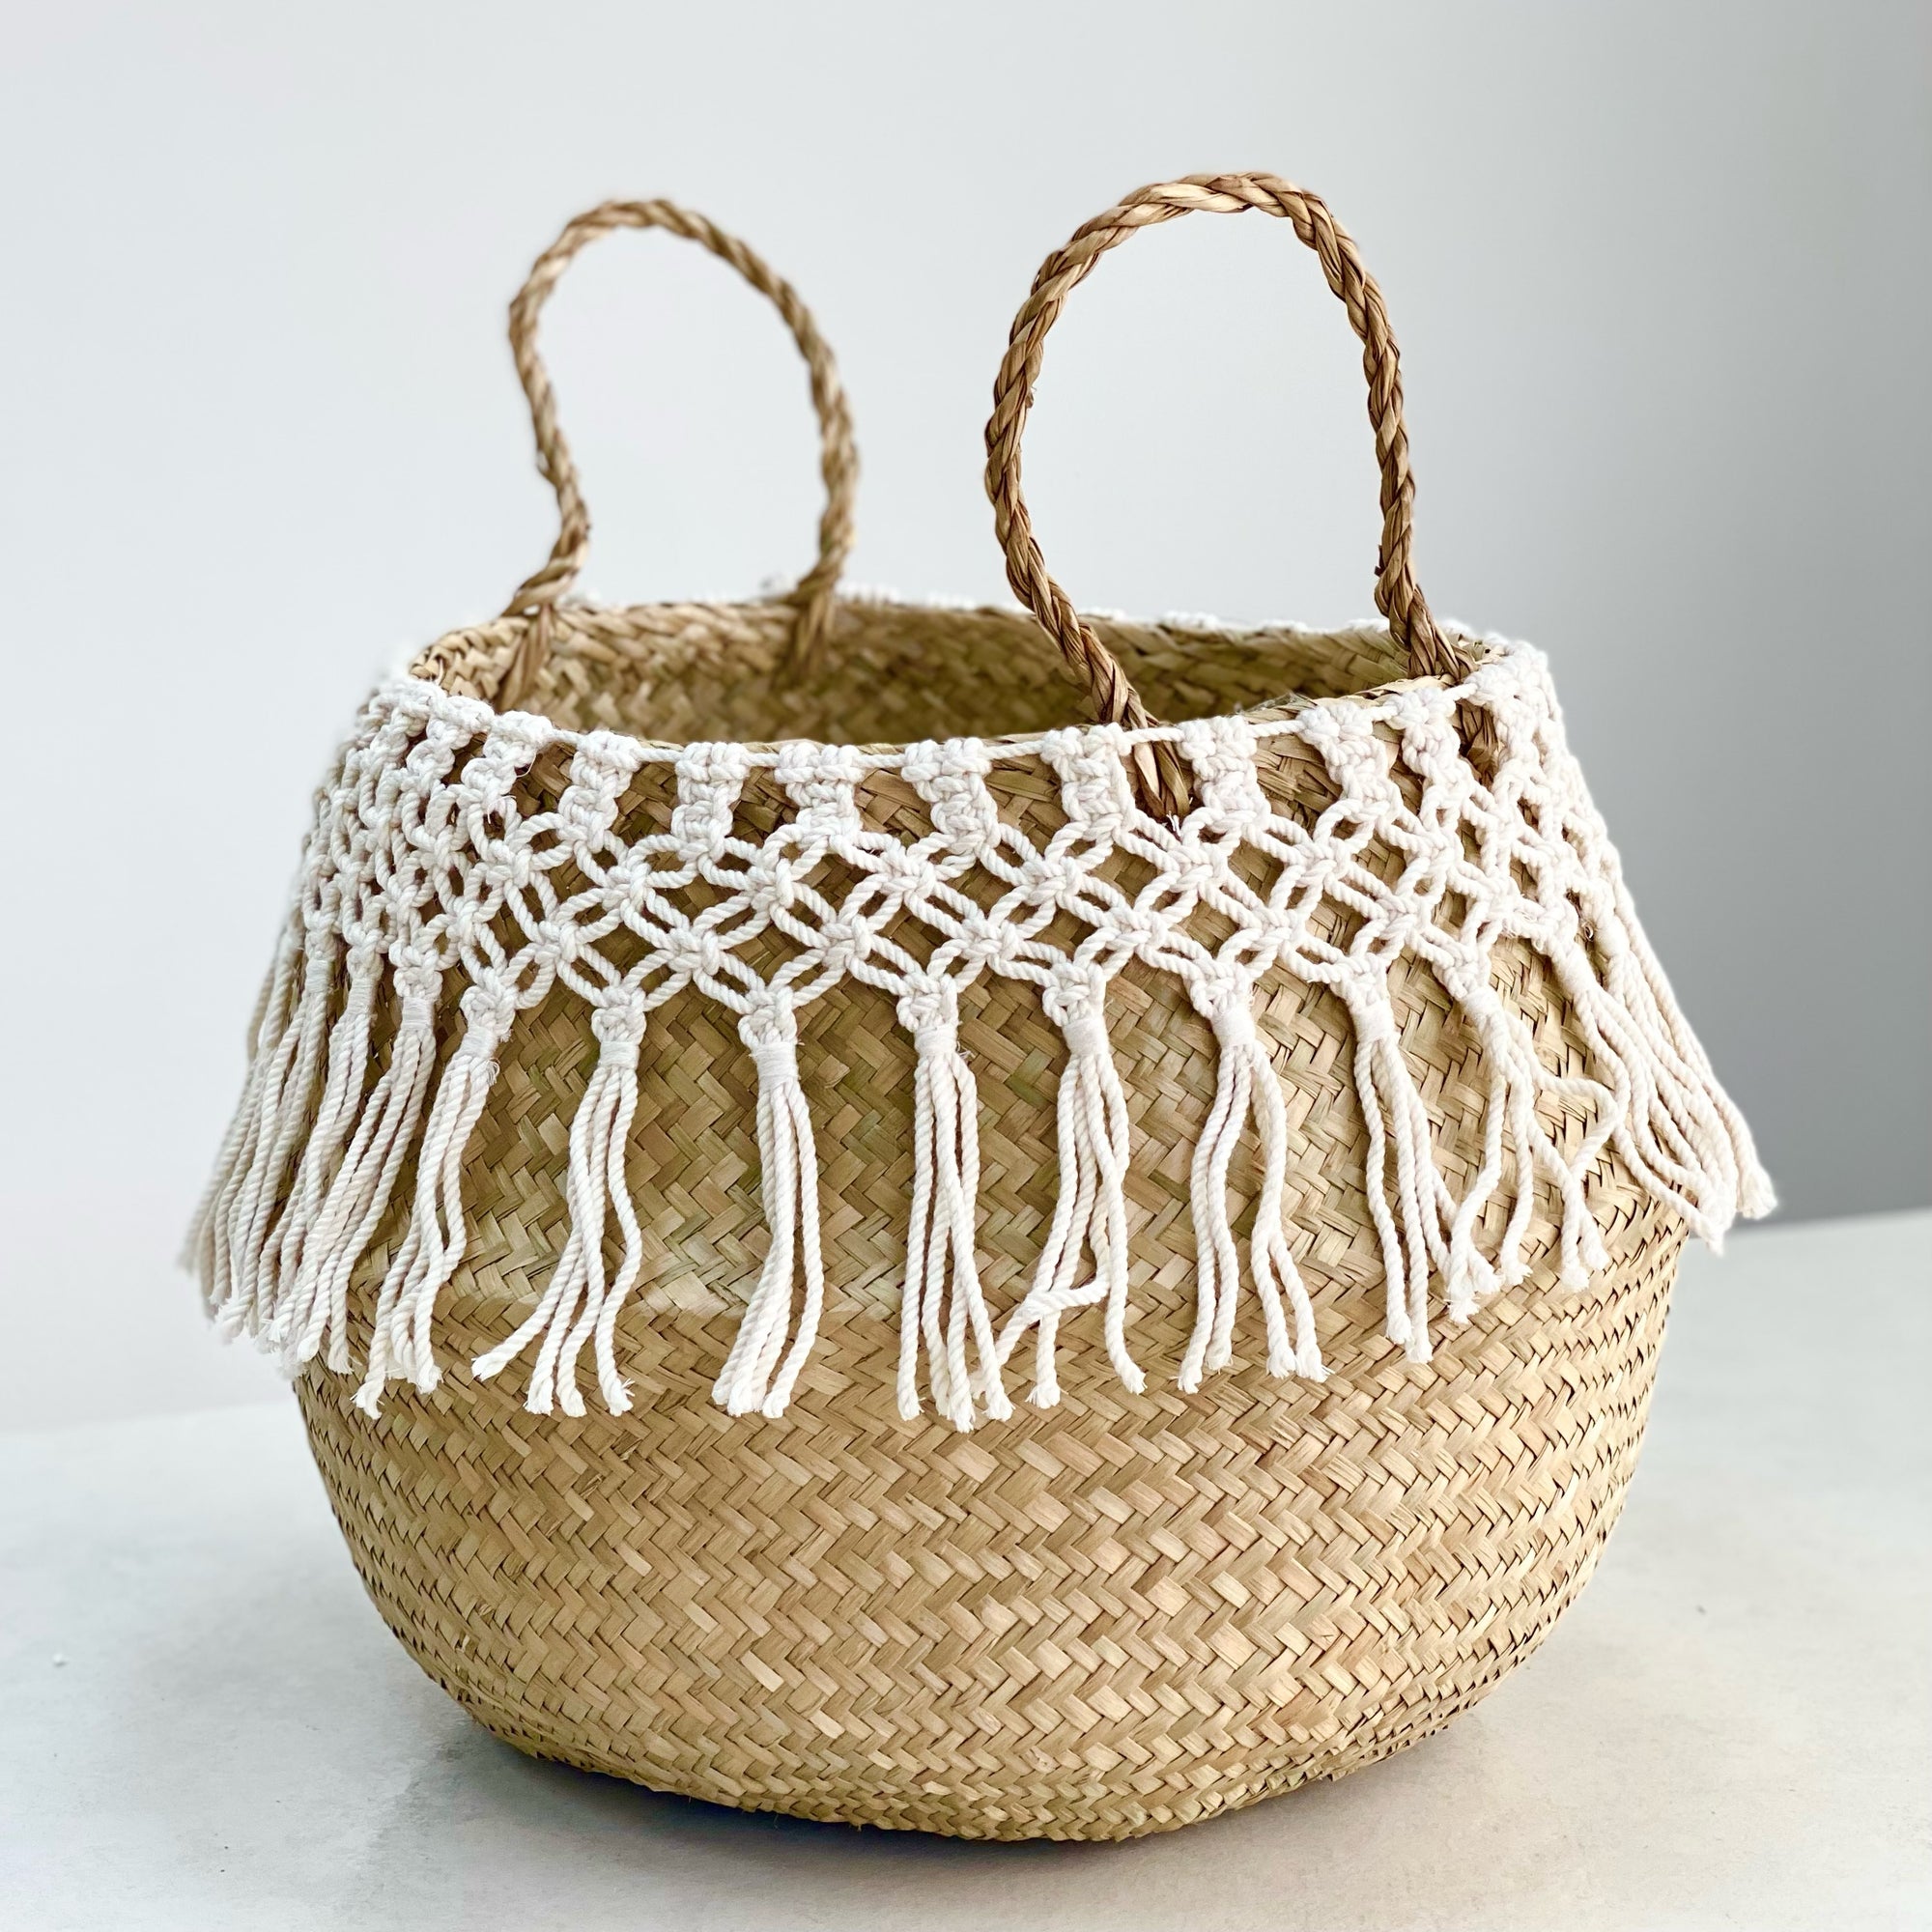 Stylish Seagrass Belly Basket With Macramé Decor